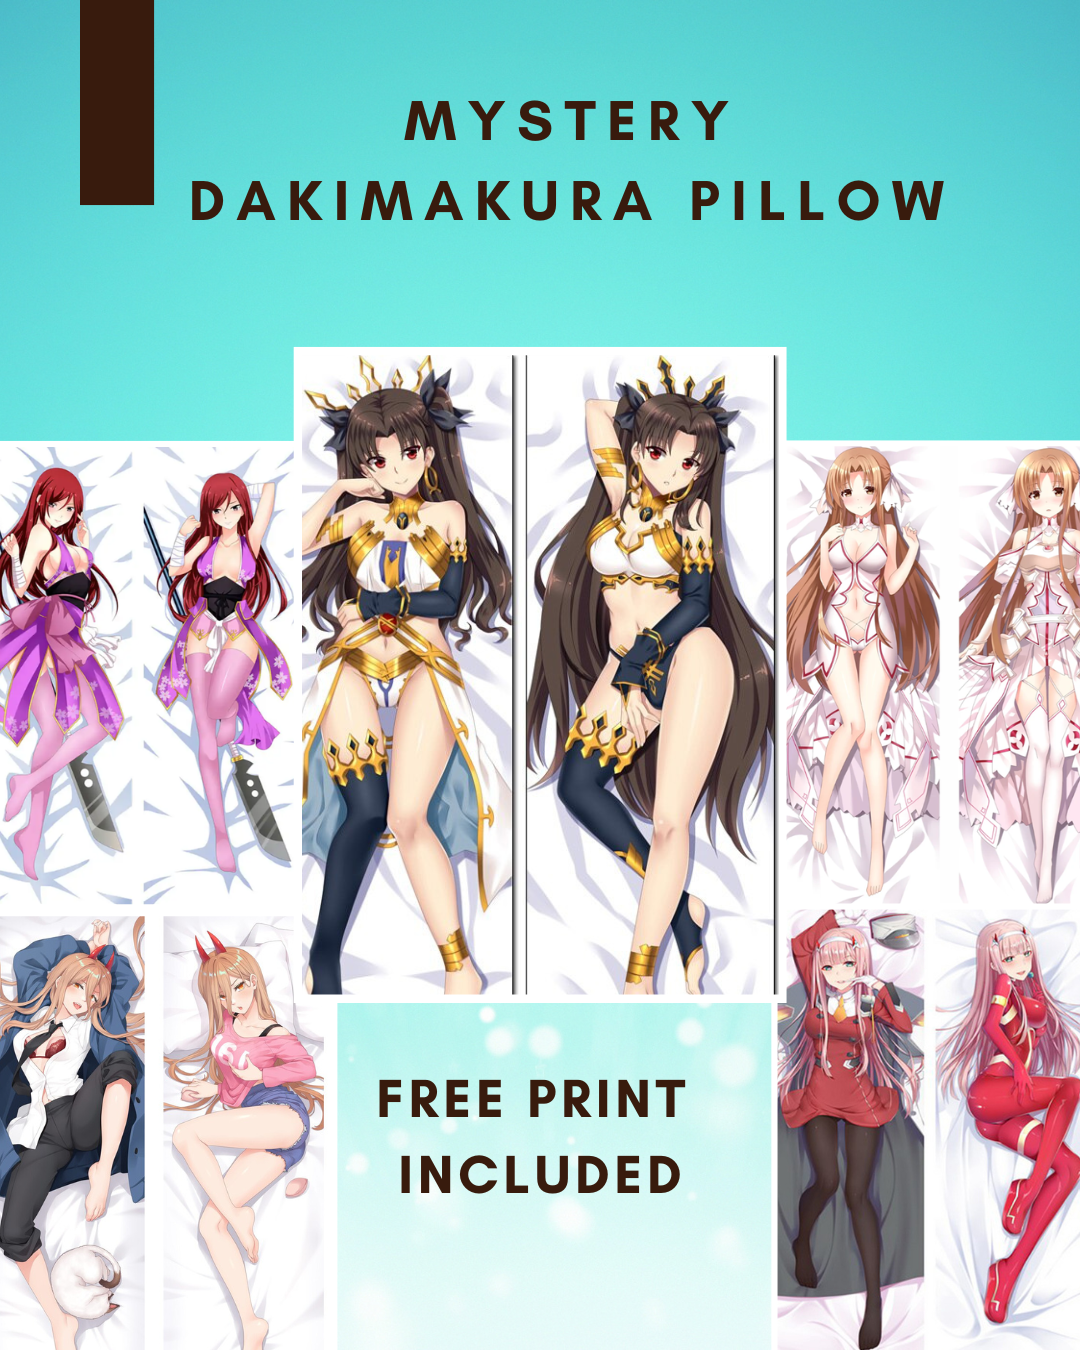 MYSTERY WAIFU DAKIMAKURA PILLOW - Printed Luxury Sexy Anime Body Pillow